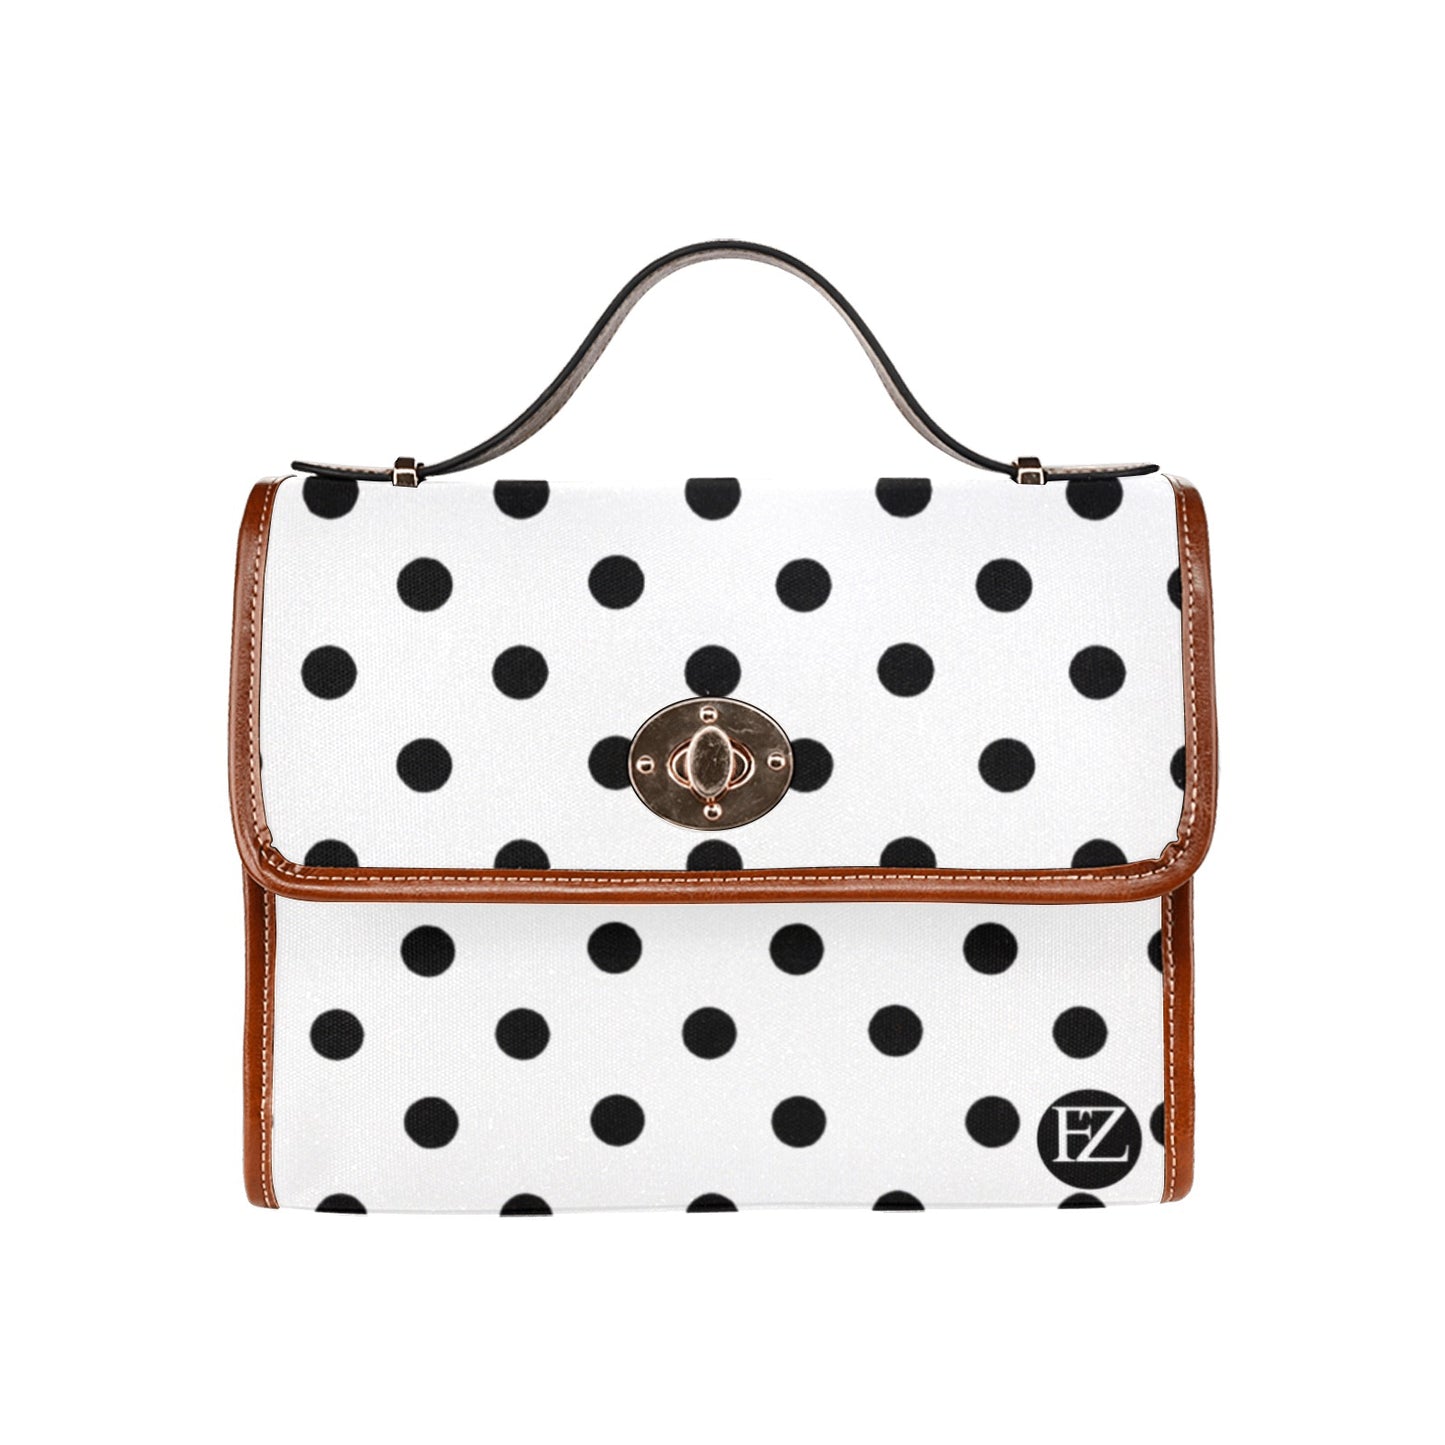 fz dot handbag one size / fz white dot handbag all over print waterproof canvas bag(model1641)(brown strap)